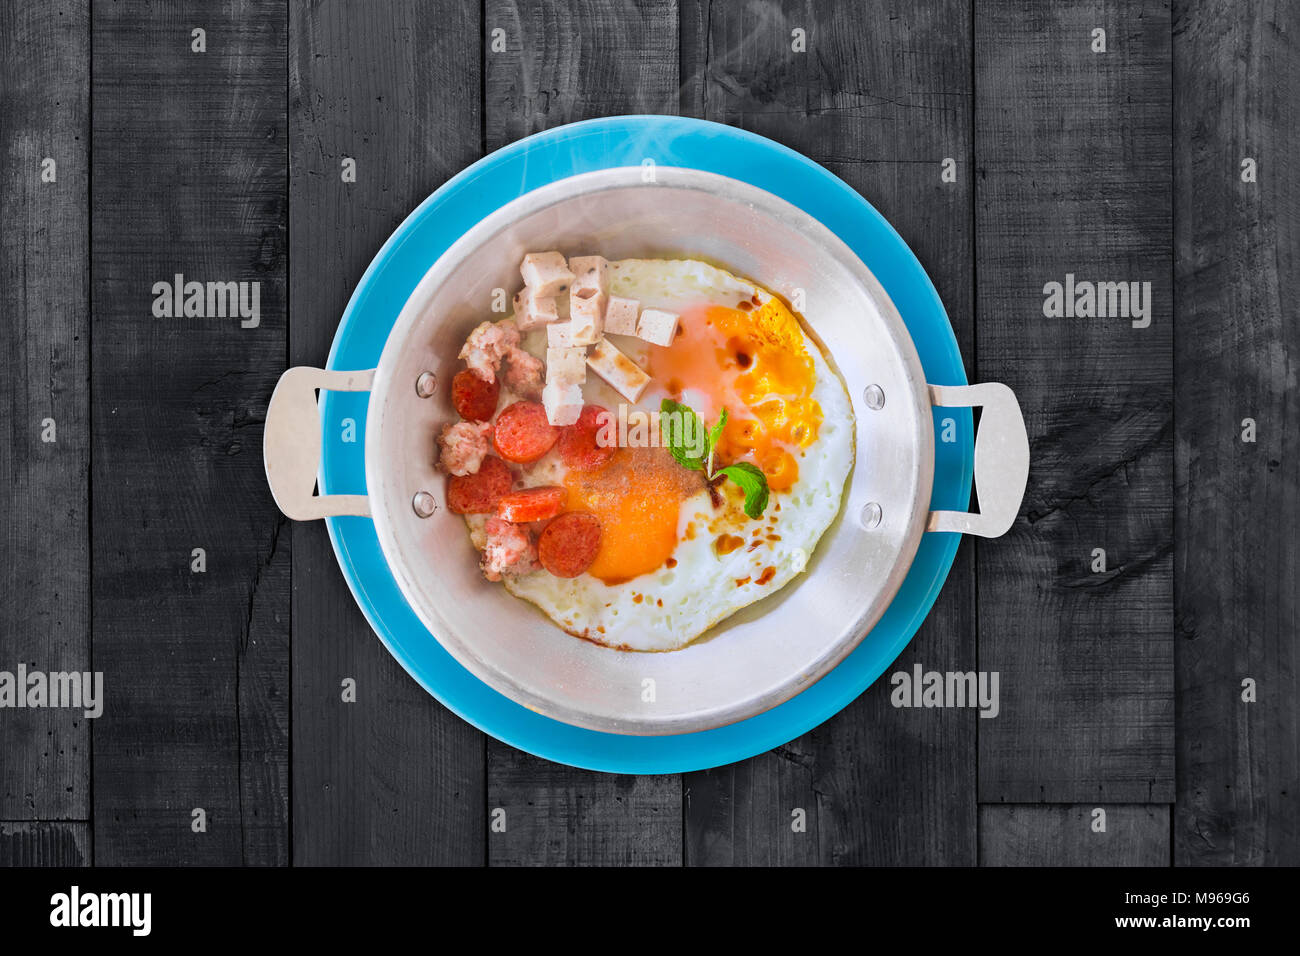 Hot Pan Eggs Recipe - Breakfast Thai Style on black wooden table Stock Photo